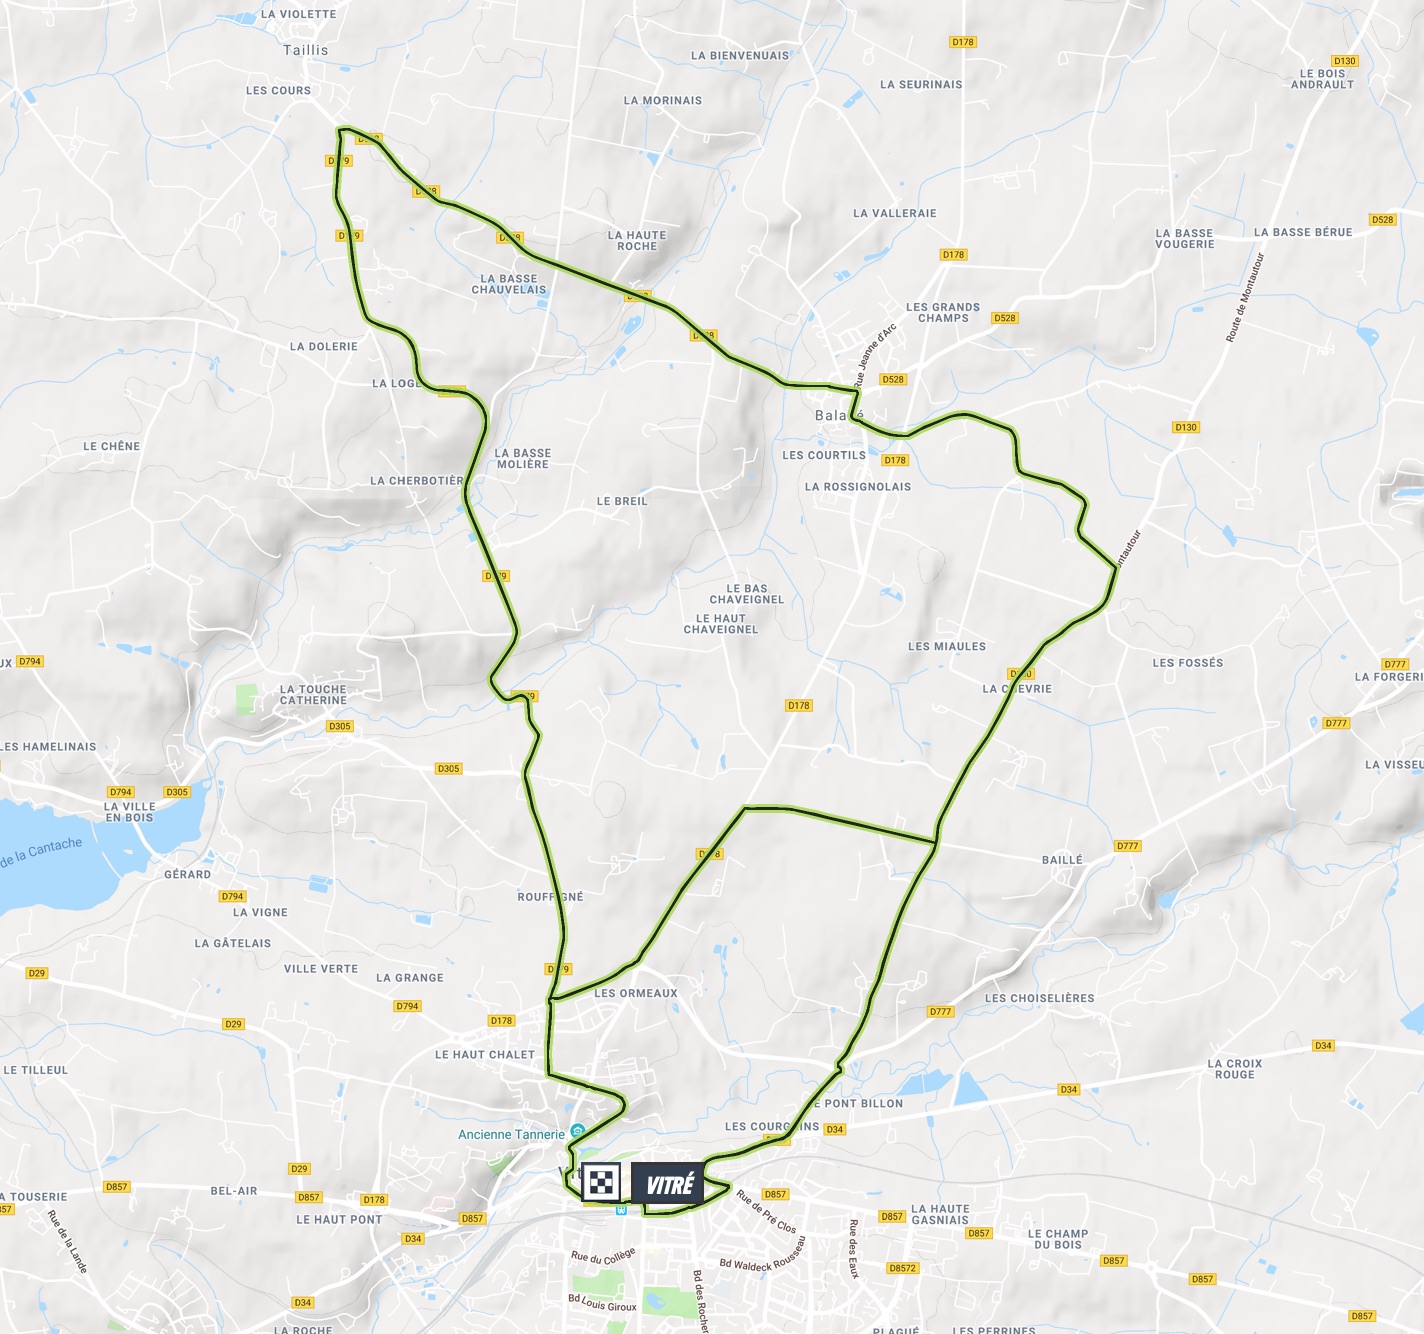 route-adelie-de-vitre-2019-map-05743823e1.jpg